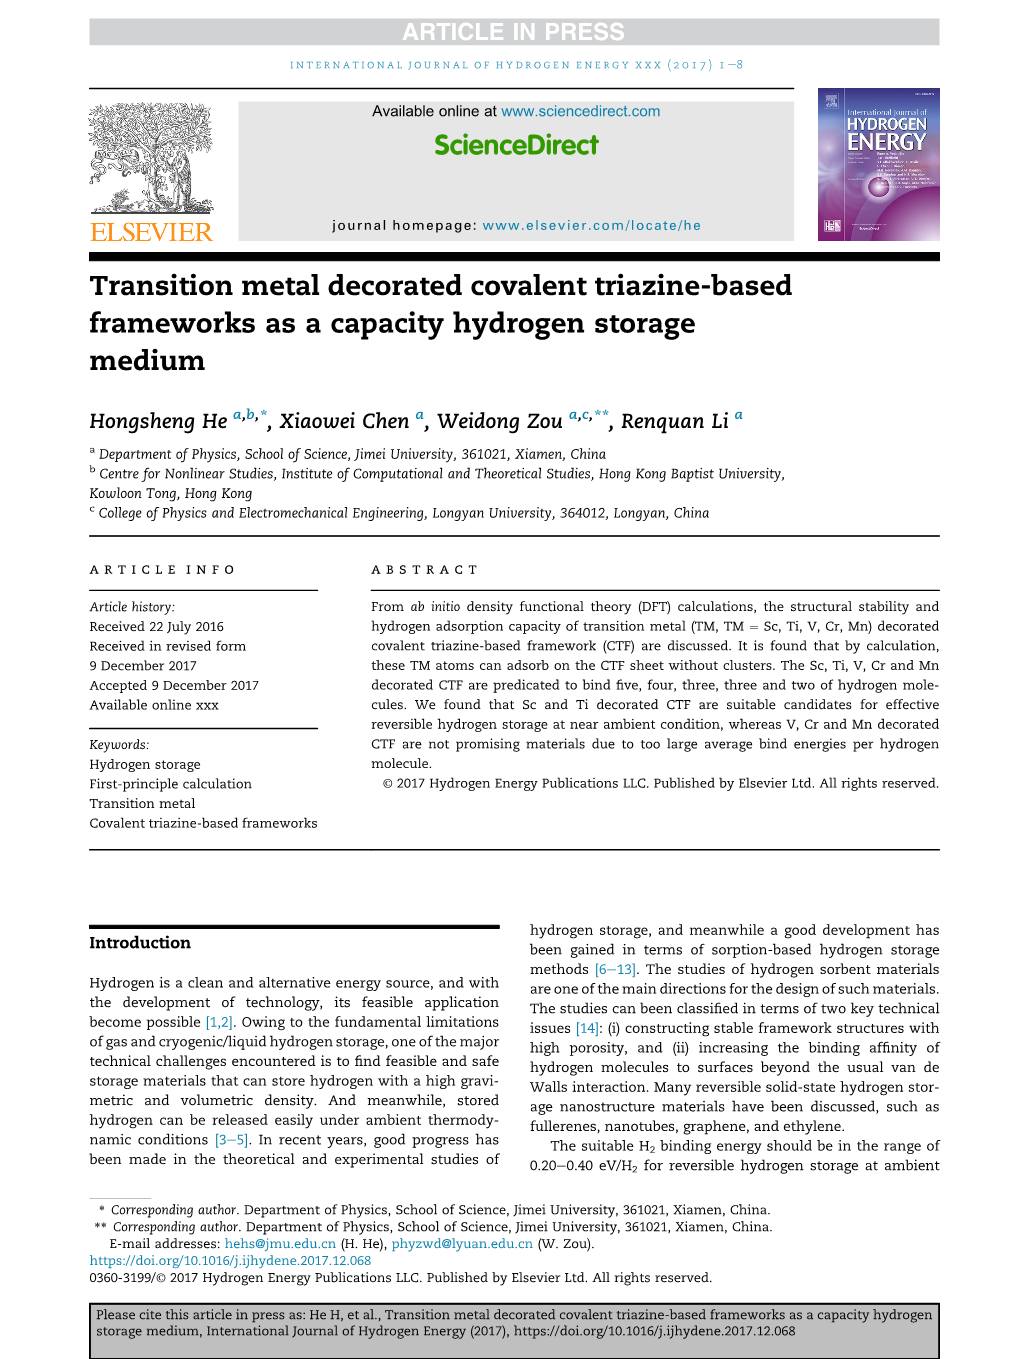 Transition Metal Decorated Covalent Triazine-Based Frameworks As a Capacity Hydrogen Storage Medium